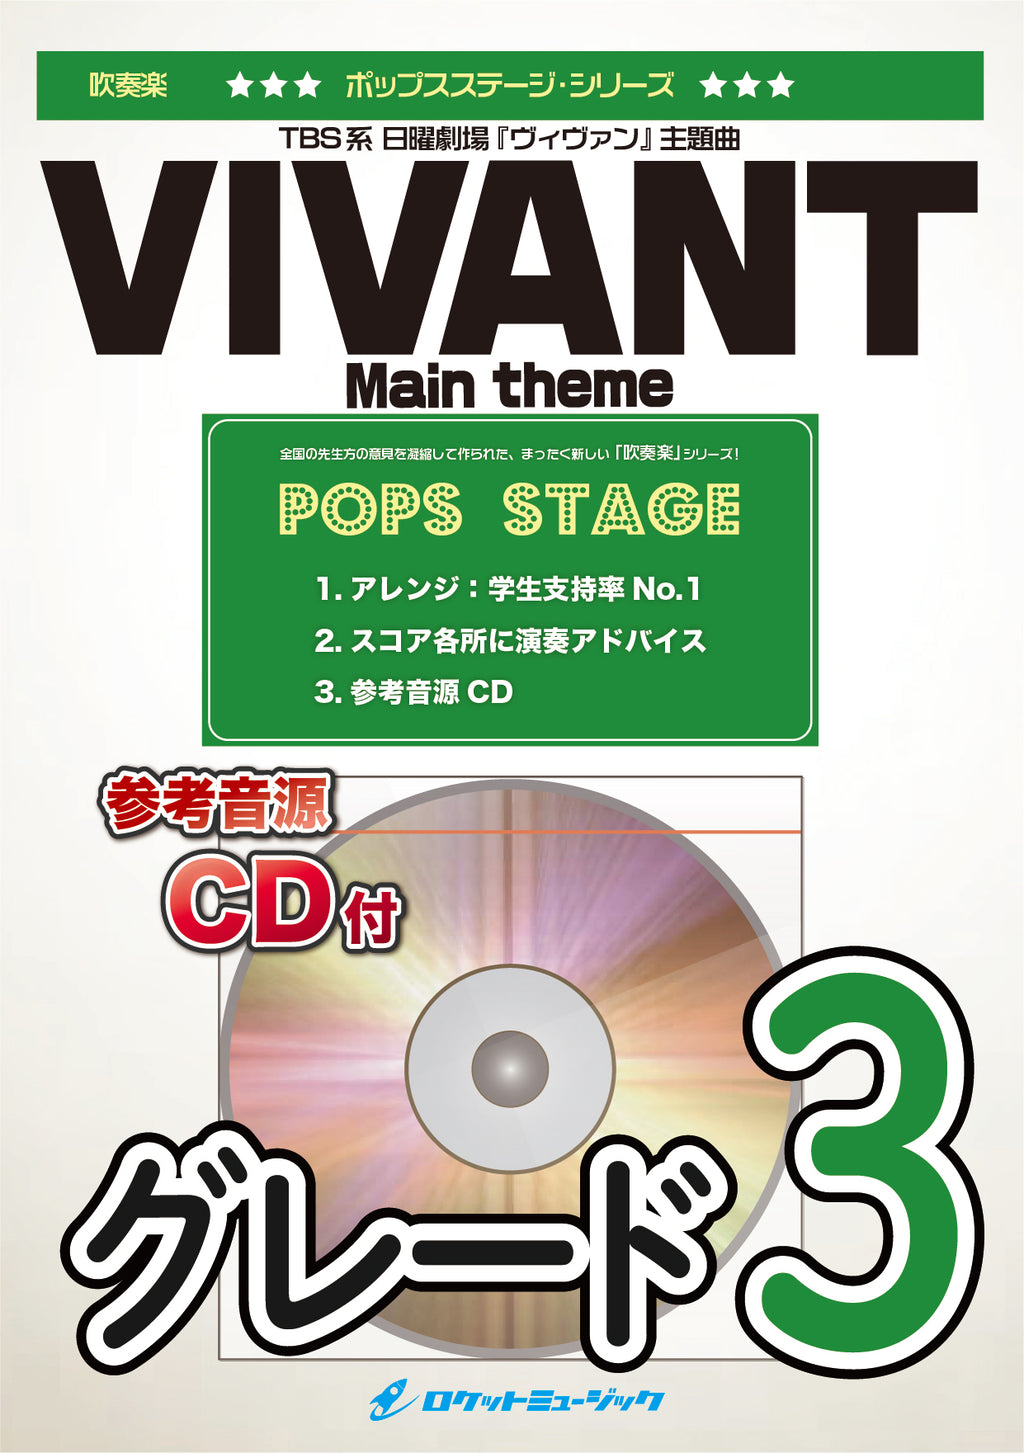 「VIVANT(ヴィヴァン)」メインテーマ 吹奏楽譜